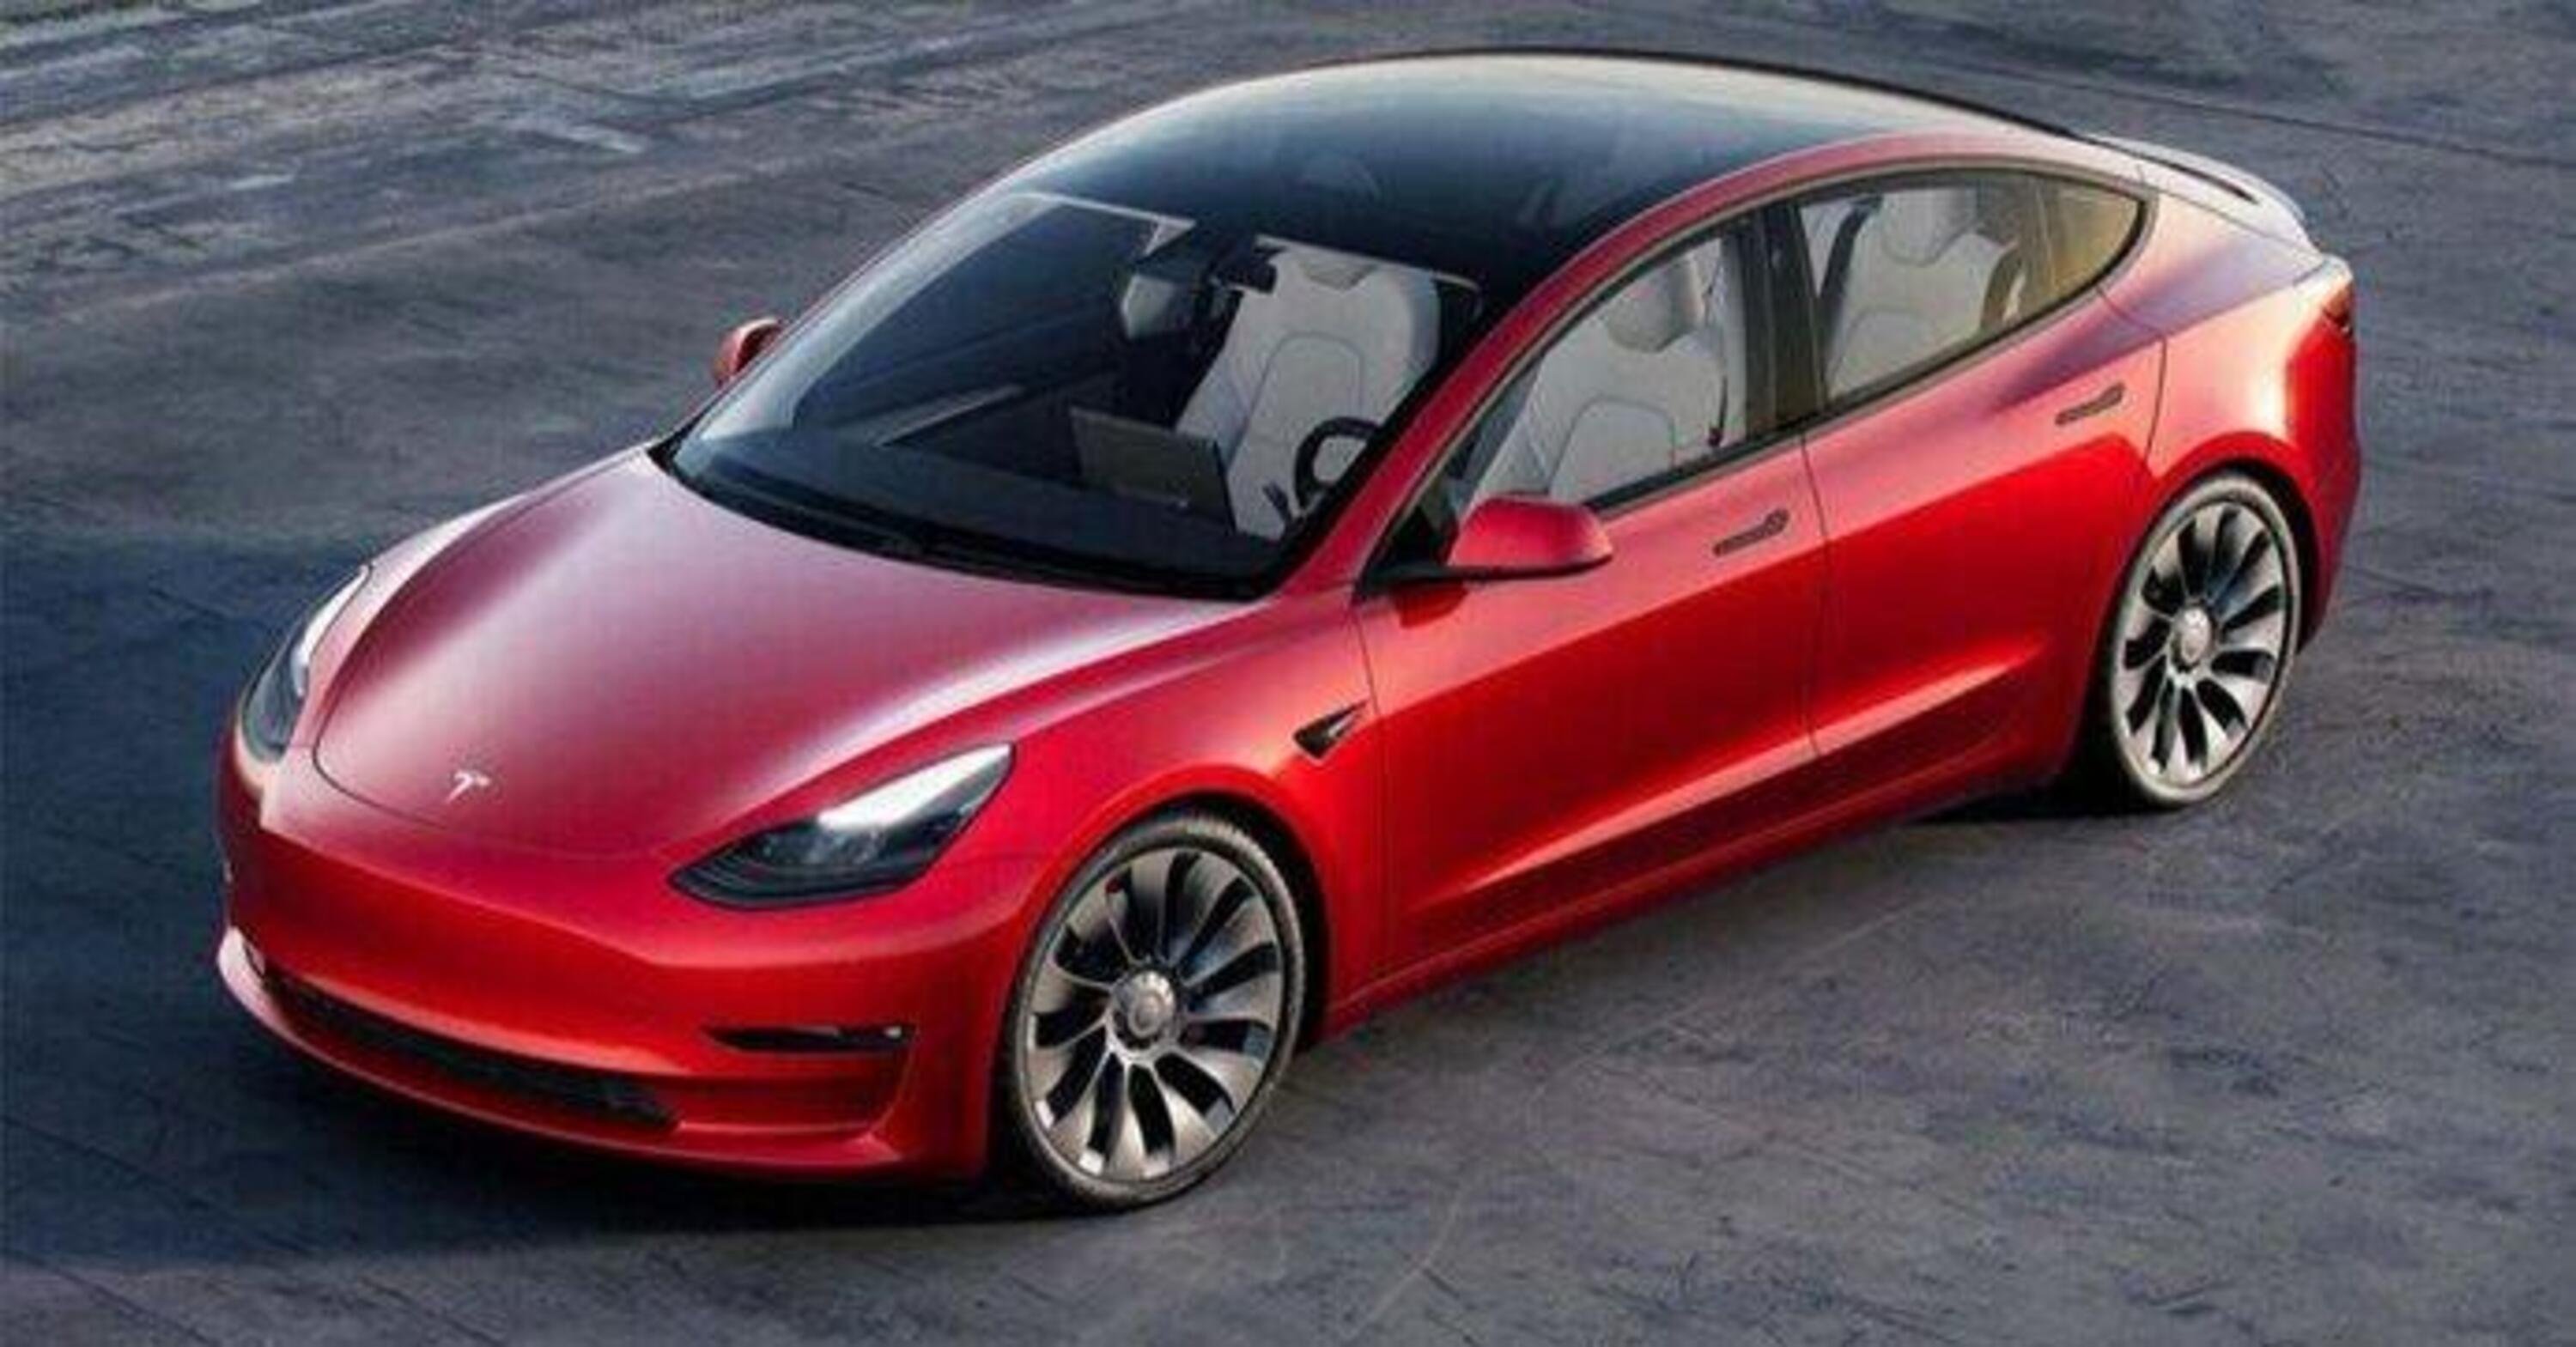 Tesla stacca il radar dalle Model 3 e Model Y. In silenzio